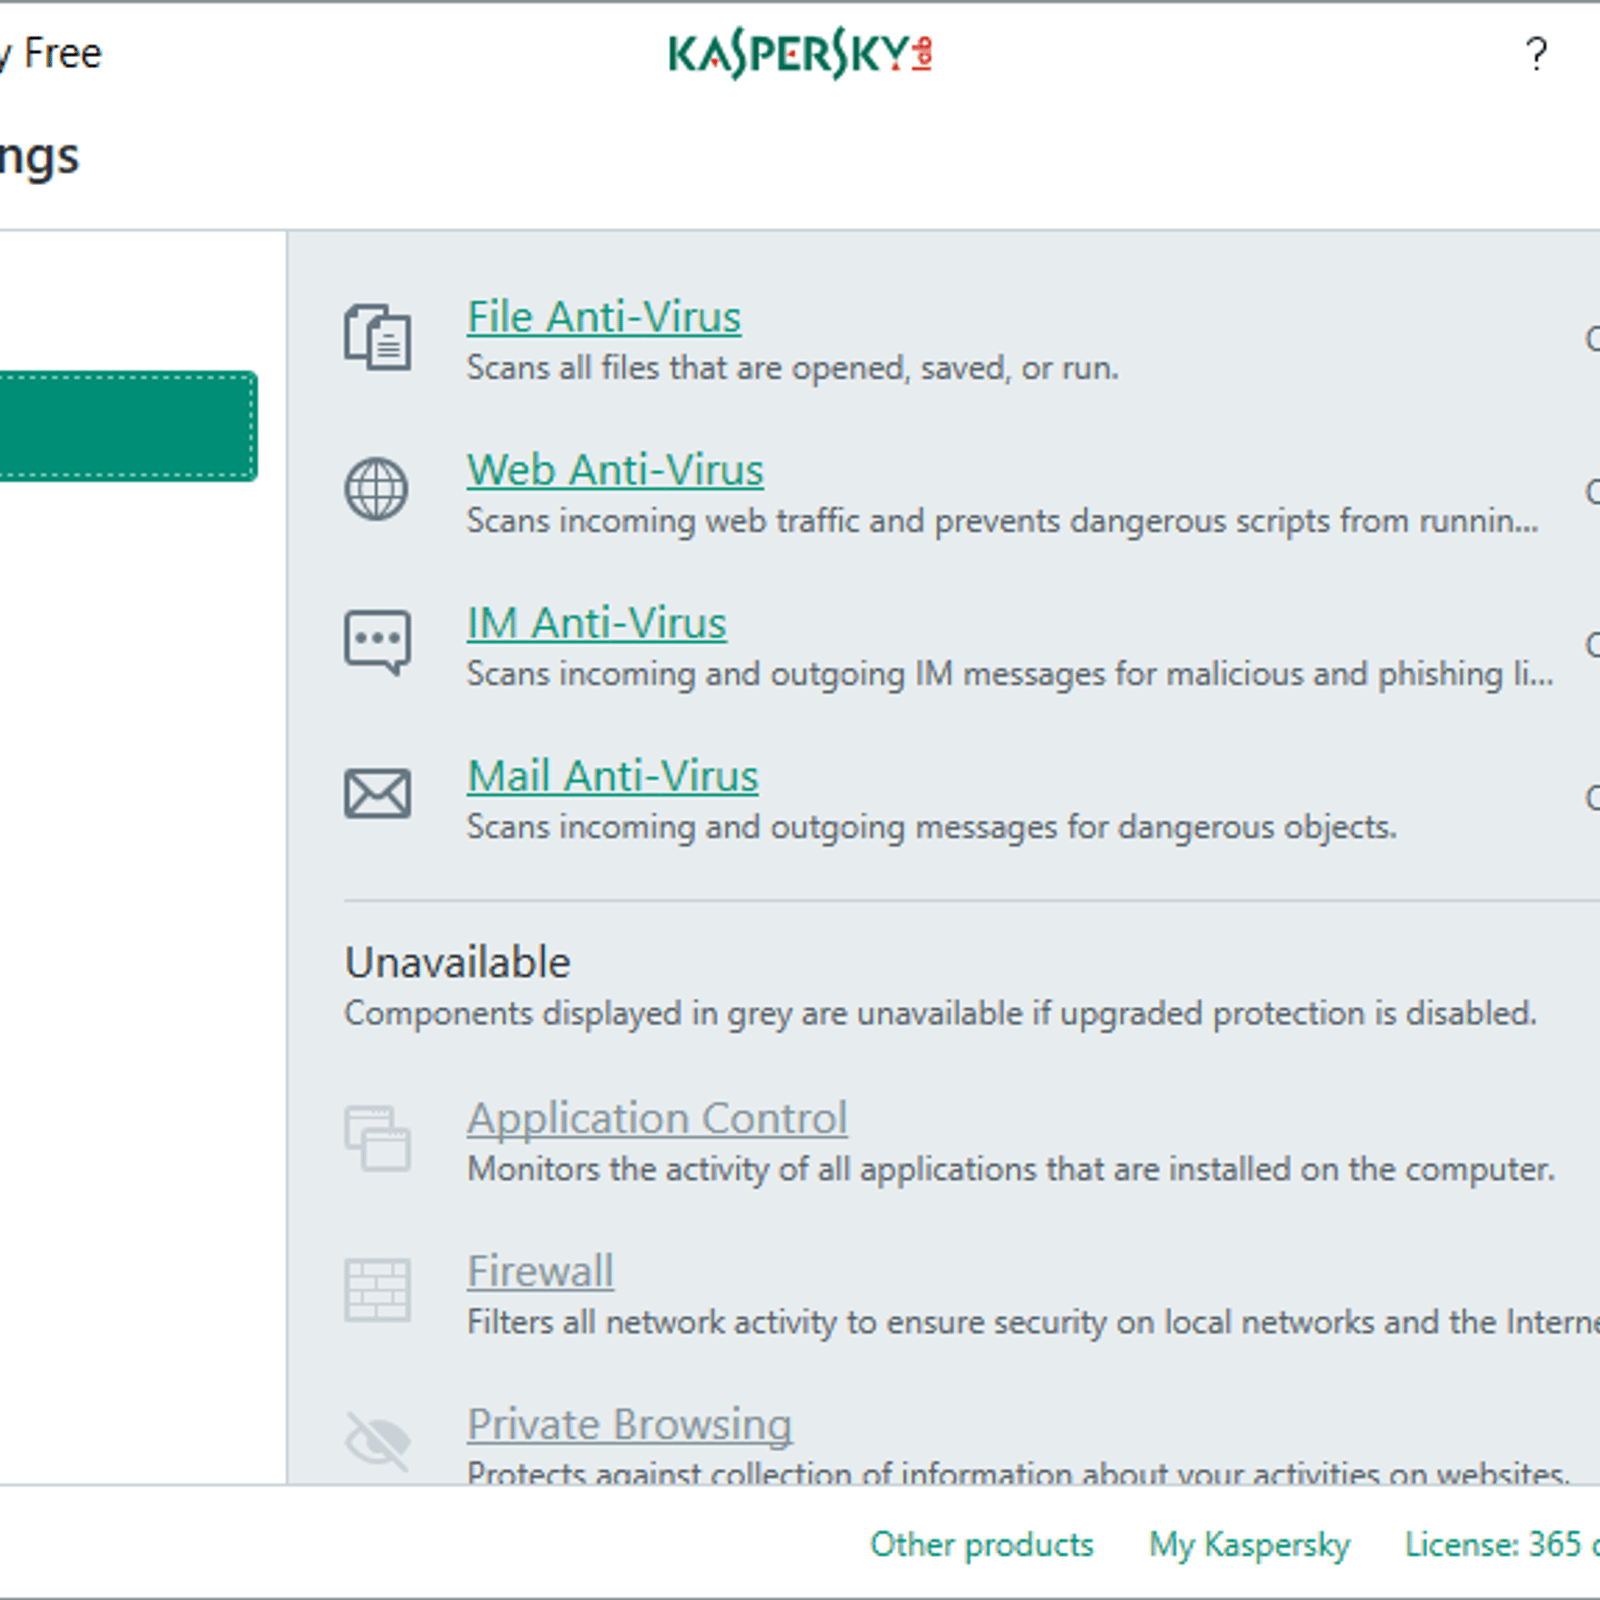 Kaspersky free virus protection